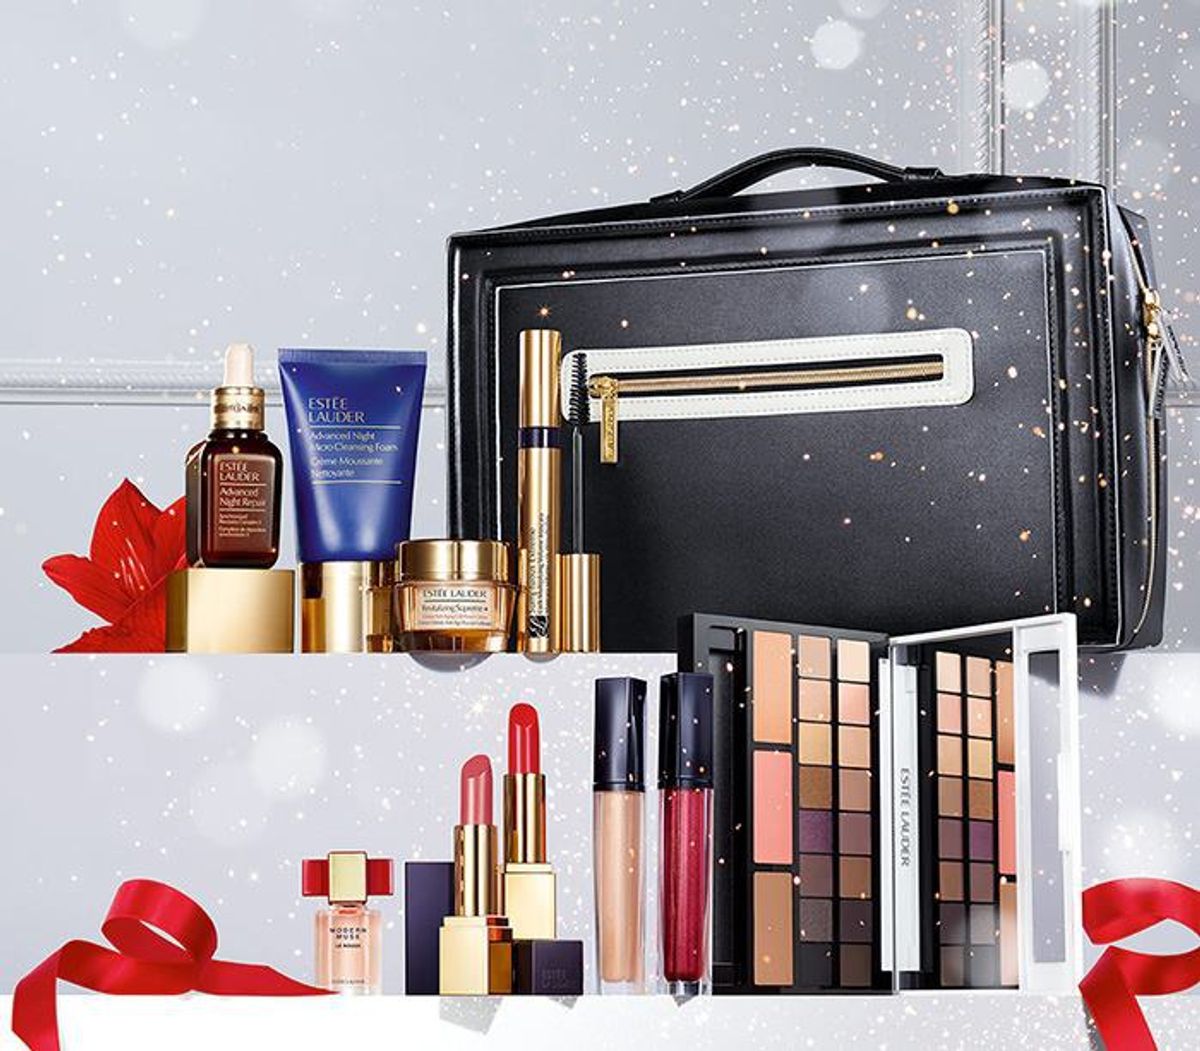 Review on 2016 Estee Lauder Holiday Blockbuster Makeup Kit Limited Gift Set